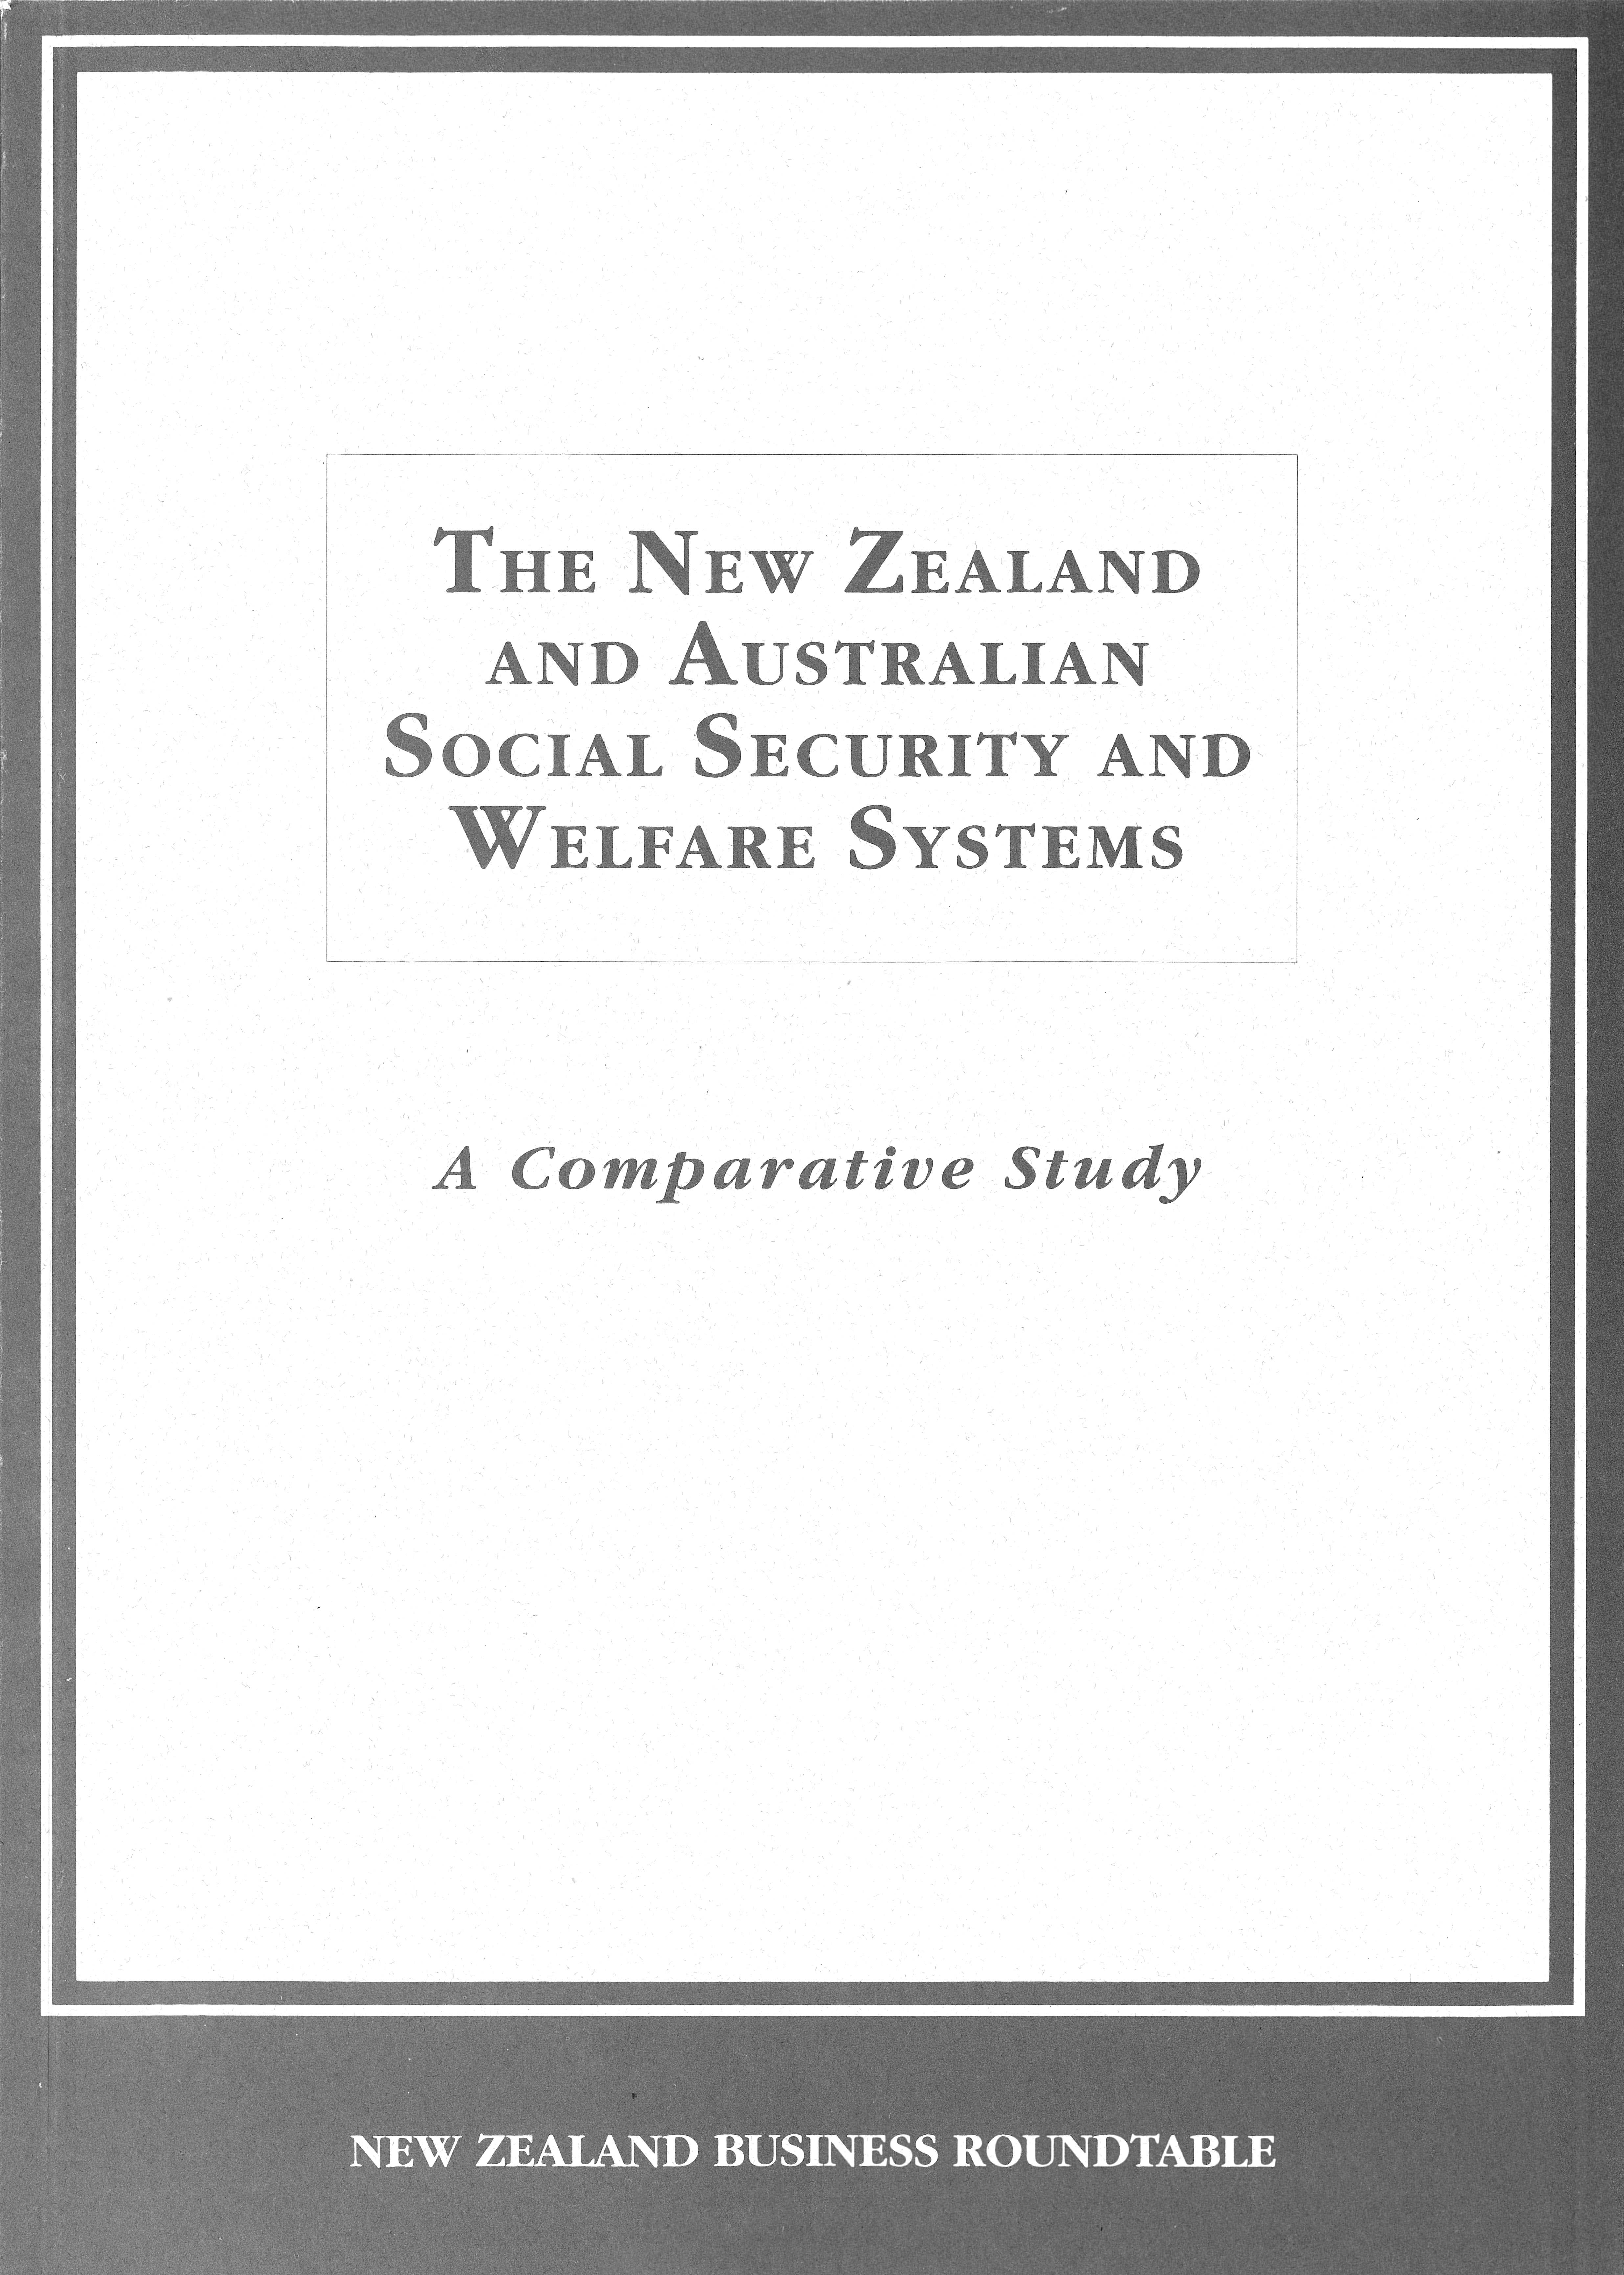 Aus NZ social security cover2